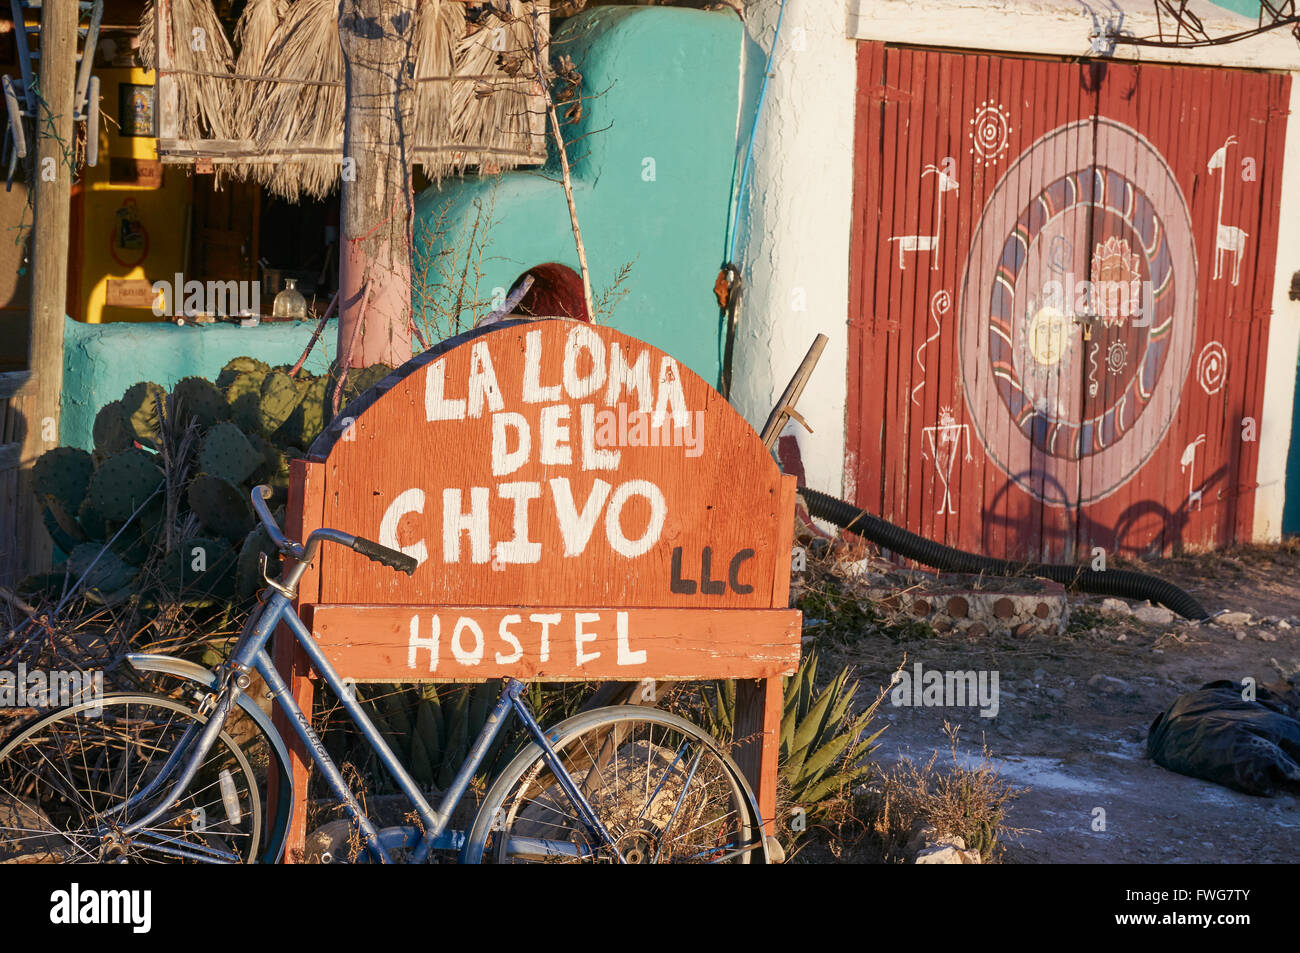 La Loma Del Chivo hostel, Marathon, Texas, États-Unis Banque D'Images